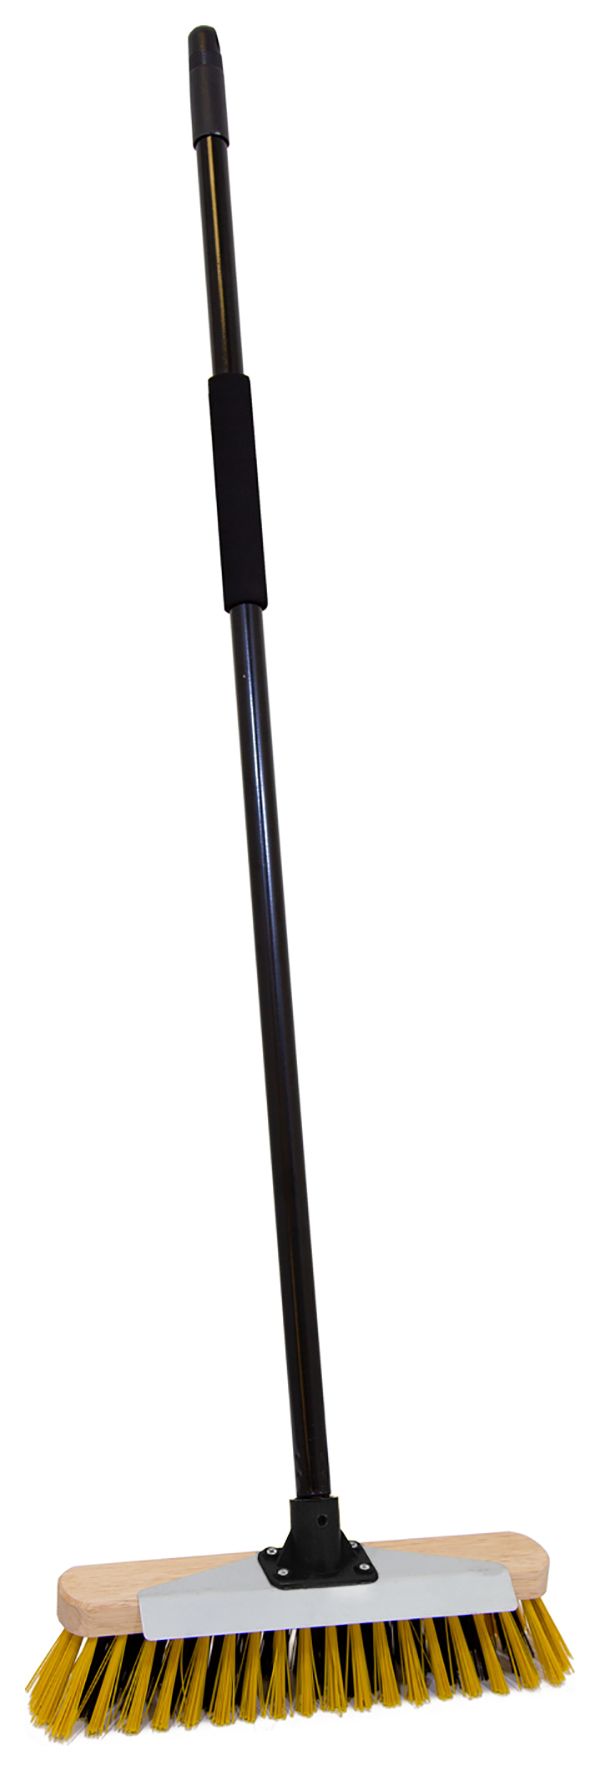 Bulldozer Utility Broom with Scraper | Wickes.co.uk